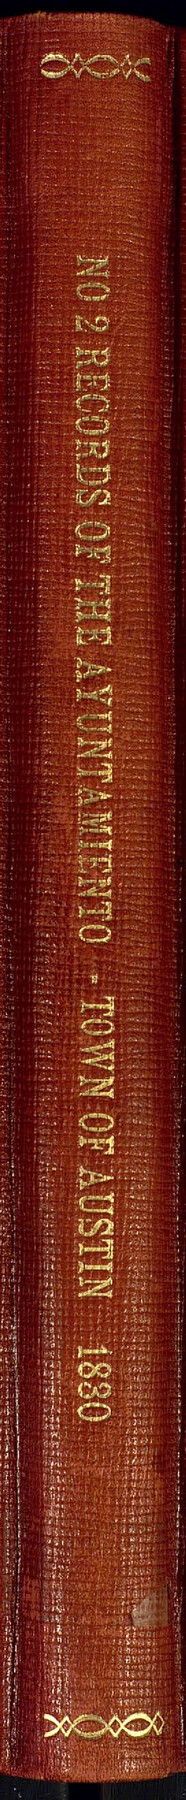 94261, Minutes of the Ayuntamiento of San Felipe de Austin Vol. 2, Historical Volumes